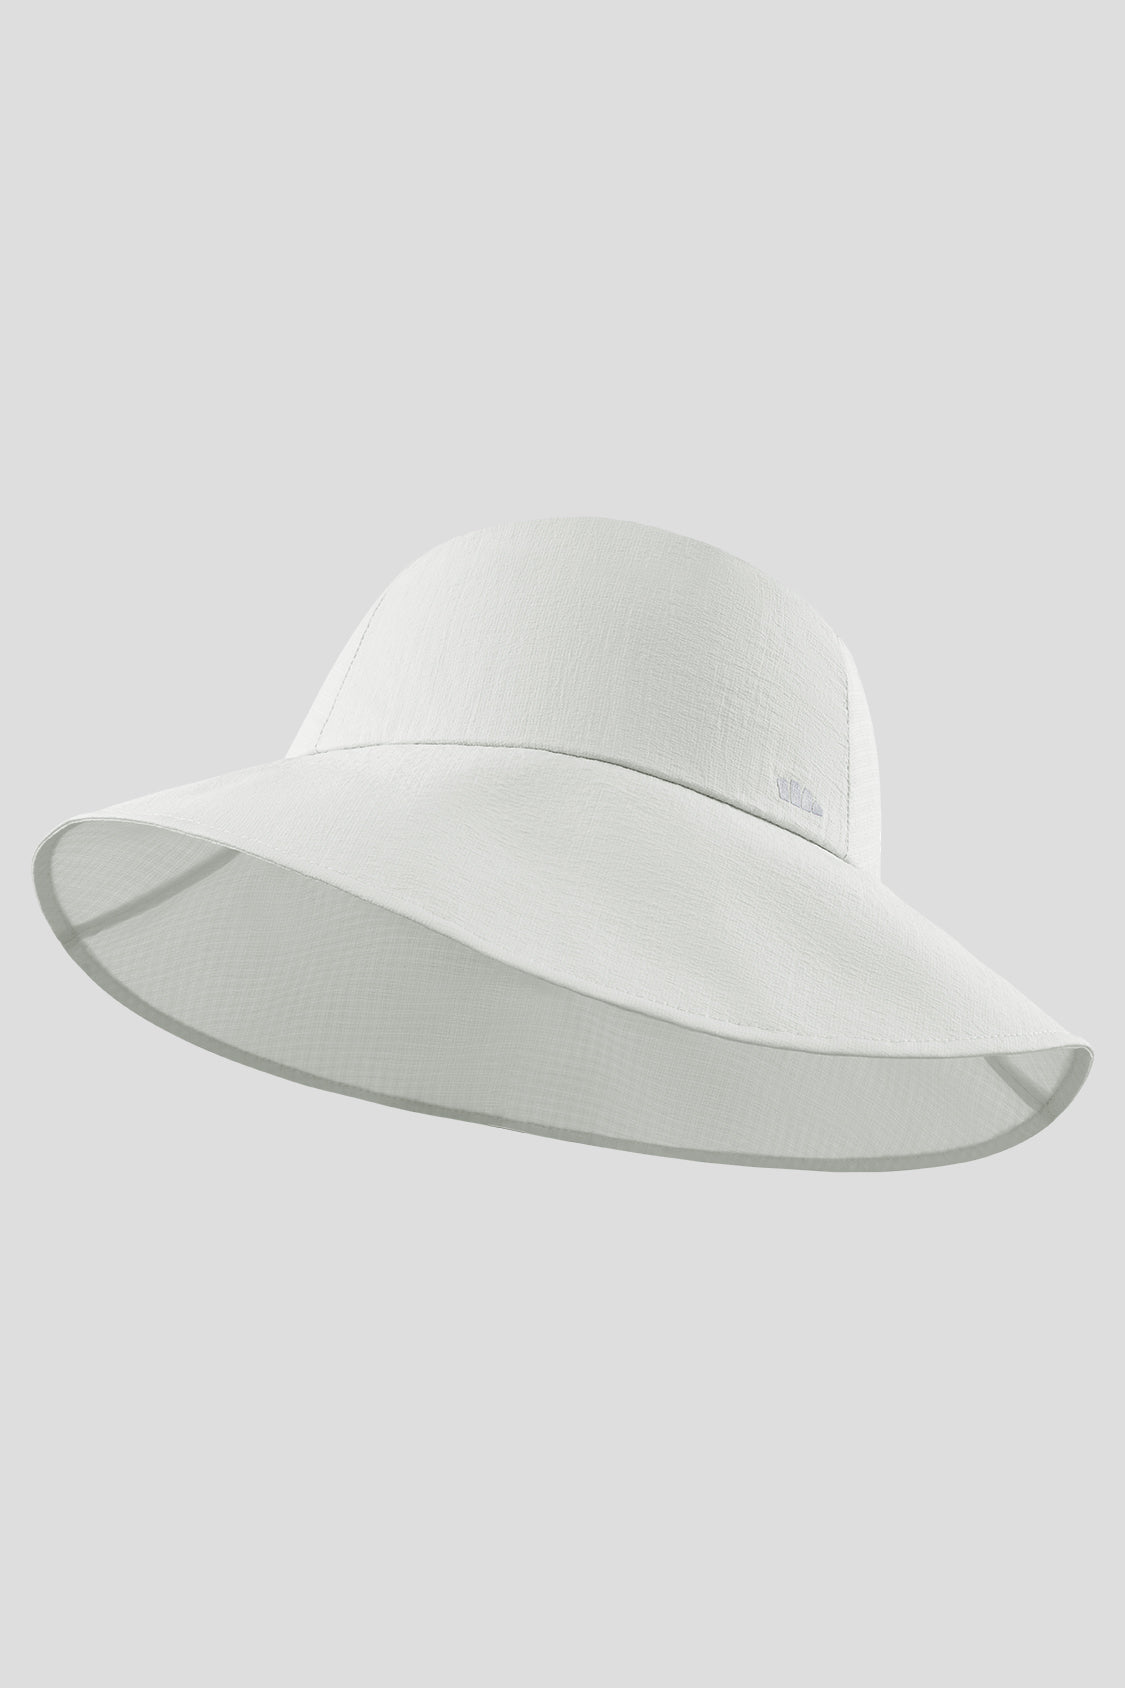 Pocket - Women's Lightweight Breathable Sun Hat UPF50+